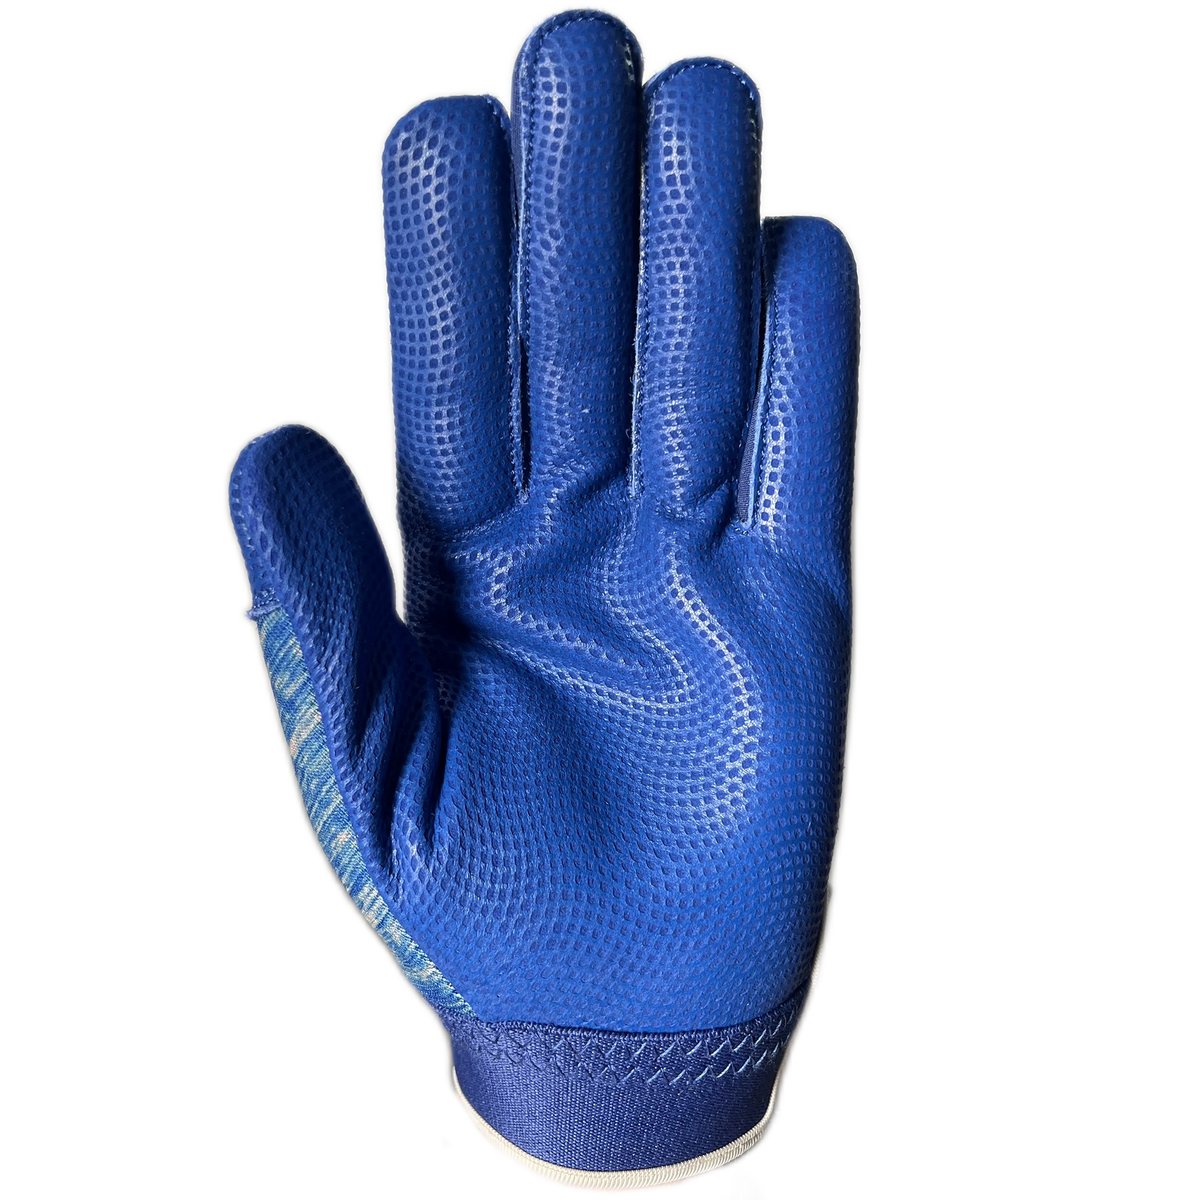 FG Cold Weather Polar-Flex Batting Gloves